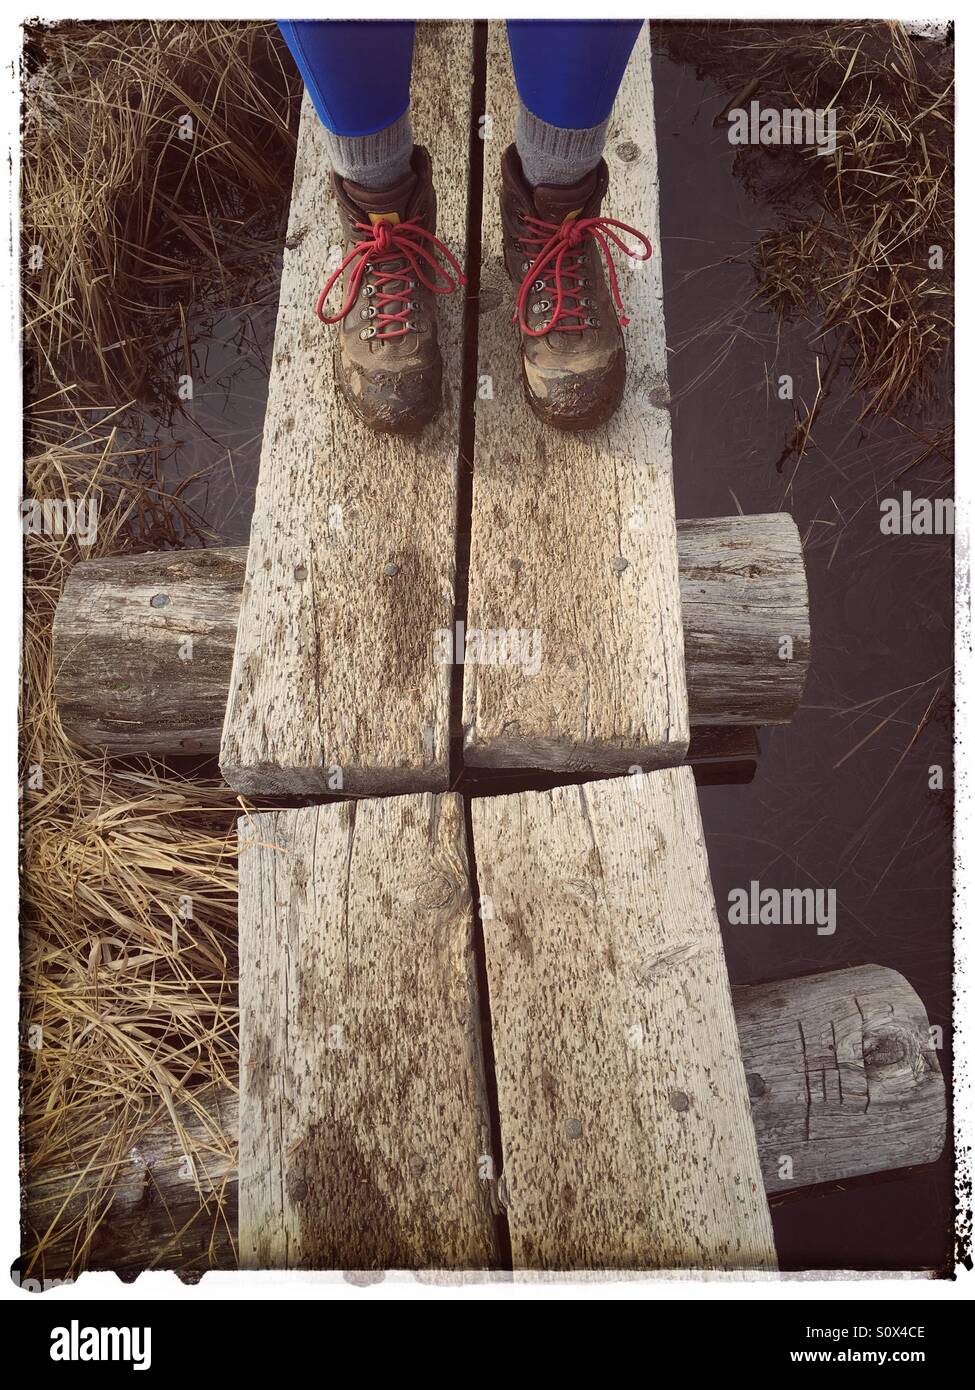 Wanderschuhe mit roten Schnürsenkeln Stockfotografie - Alamy